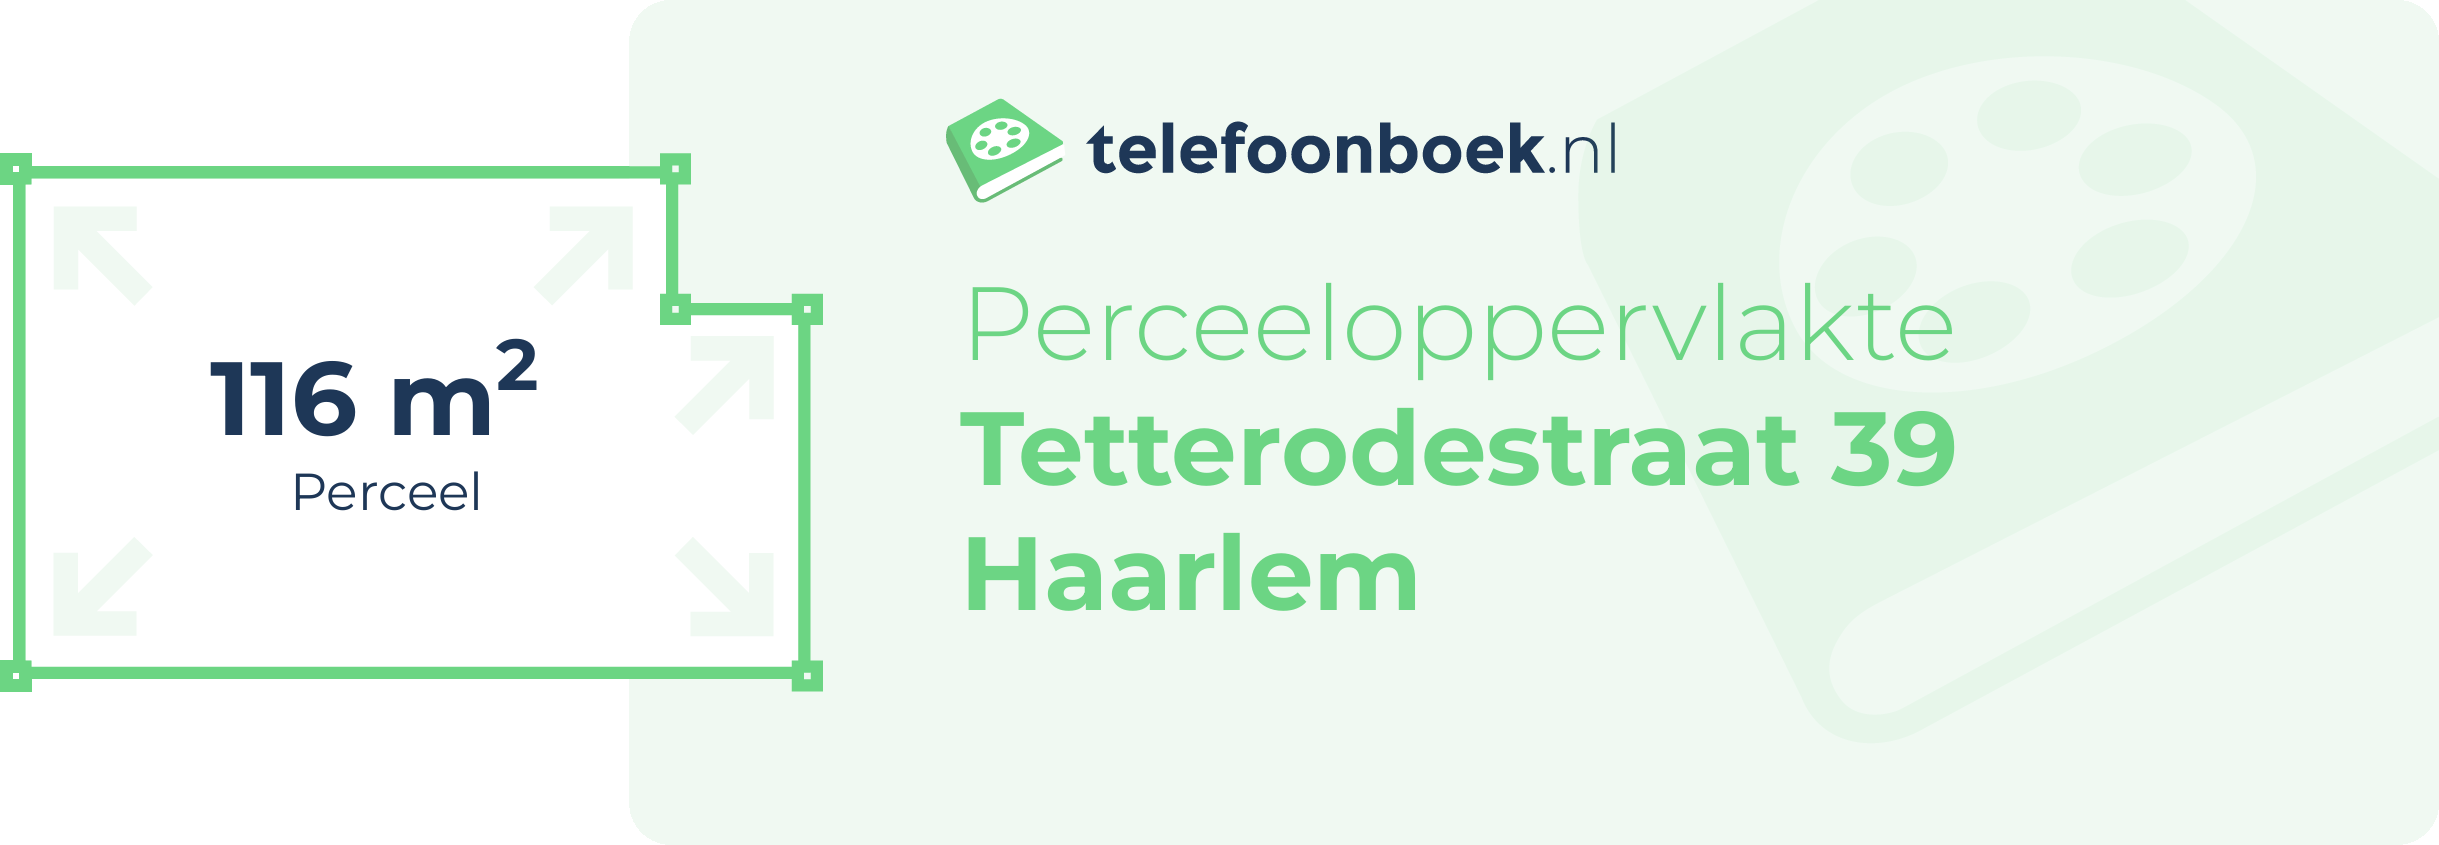 Perceeloppervlakte Tetterodestraat 39 Haarlem